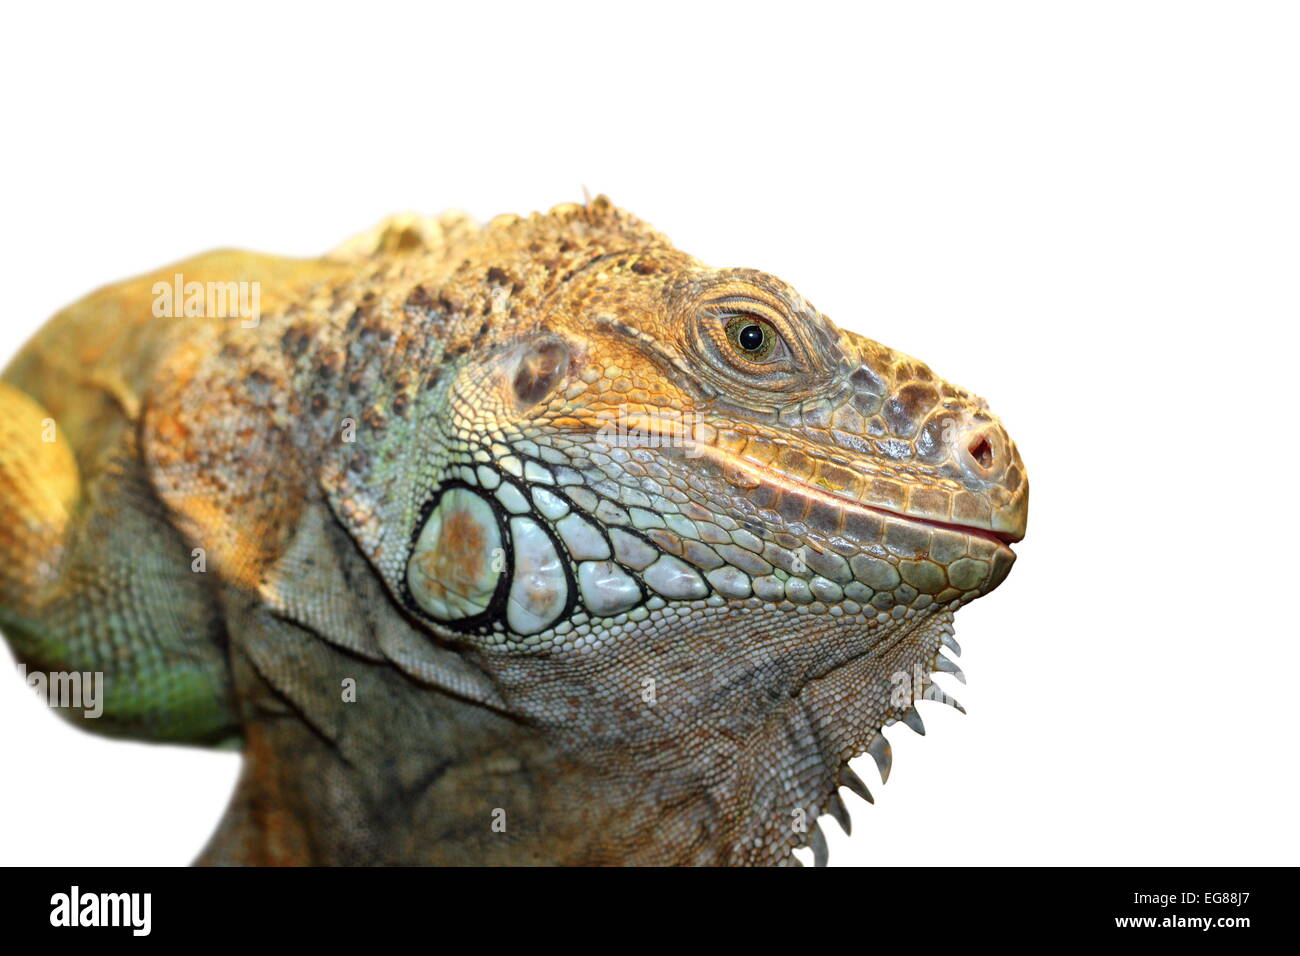 green iguana portrait isolated over white background, close up on reptile eye Stock Photo